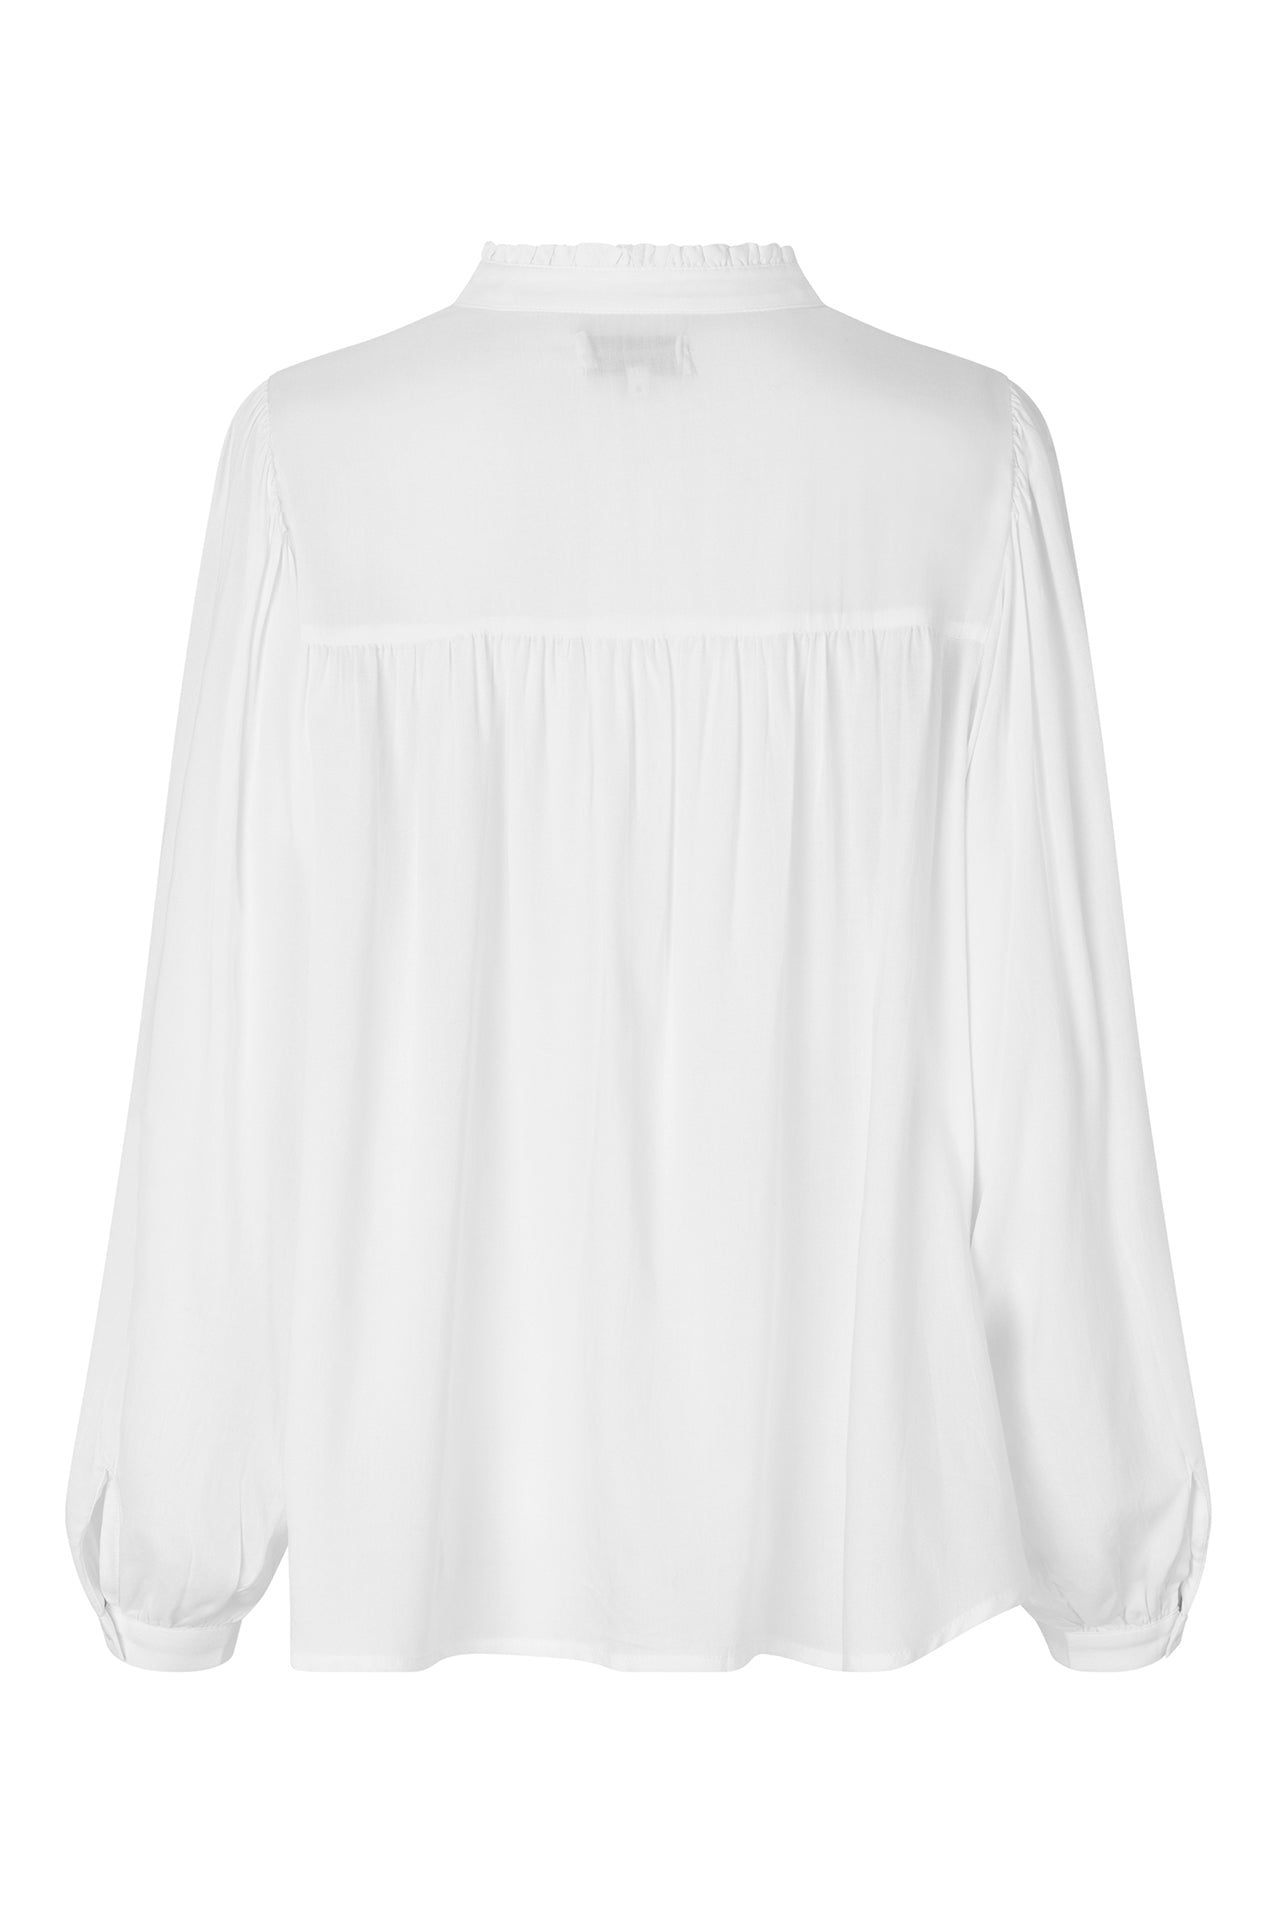 Lollys Laundry CaraLL Shirt LS Shirt 01 White